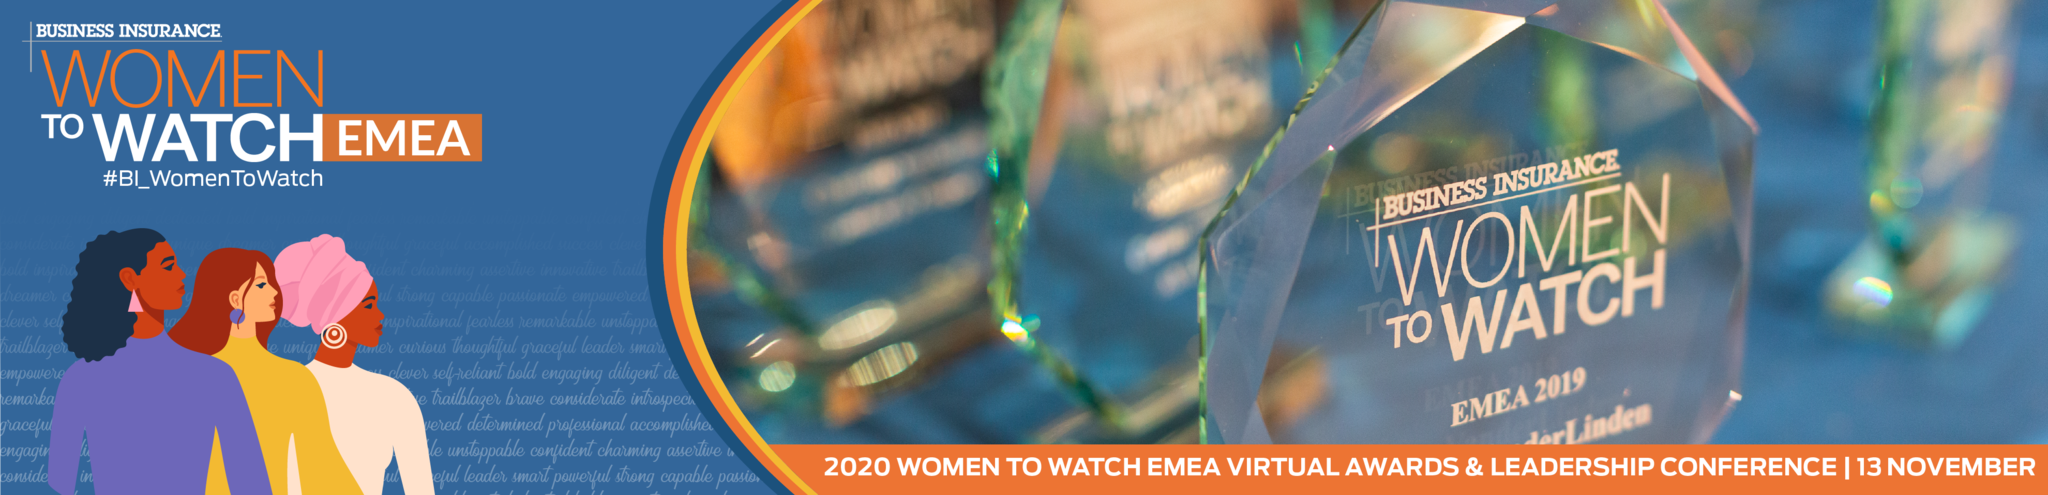 2020 WOMEN TO WATCH EMEA VIRTUAL AWARDS & LEADERSHIP CONFERENCE